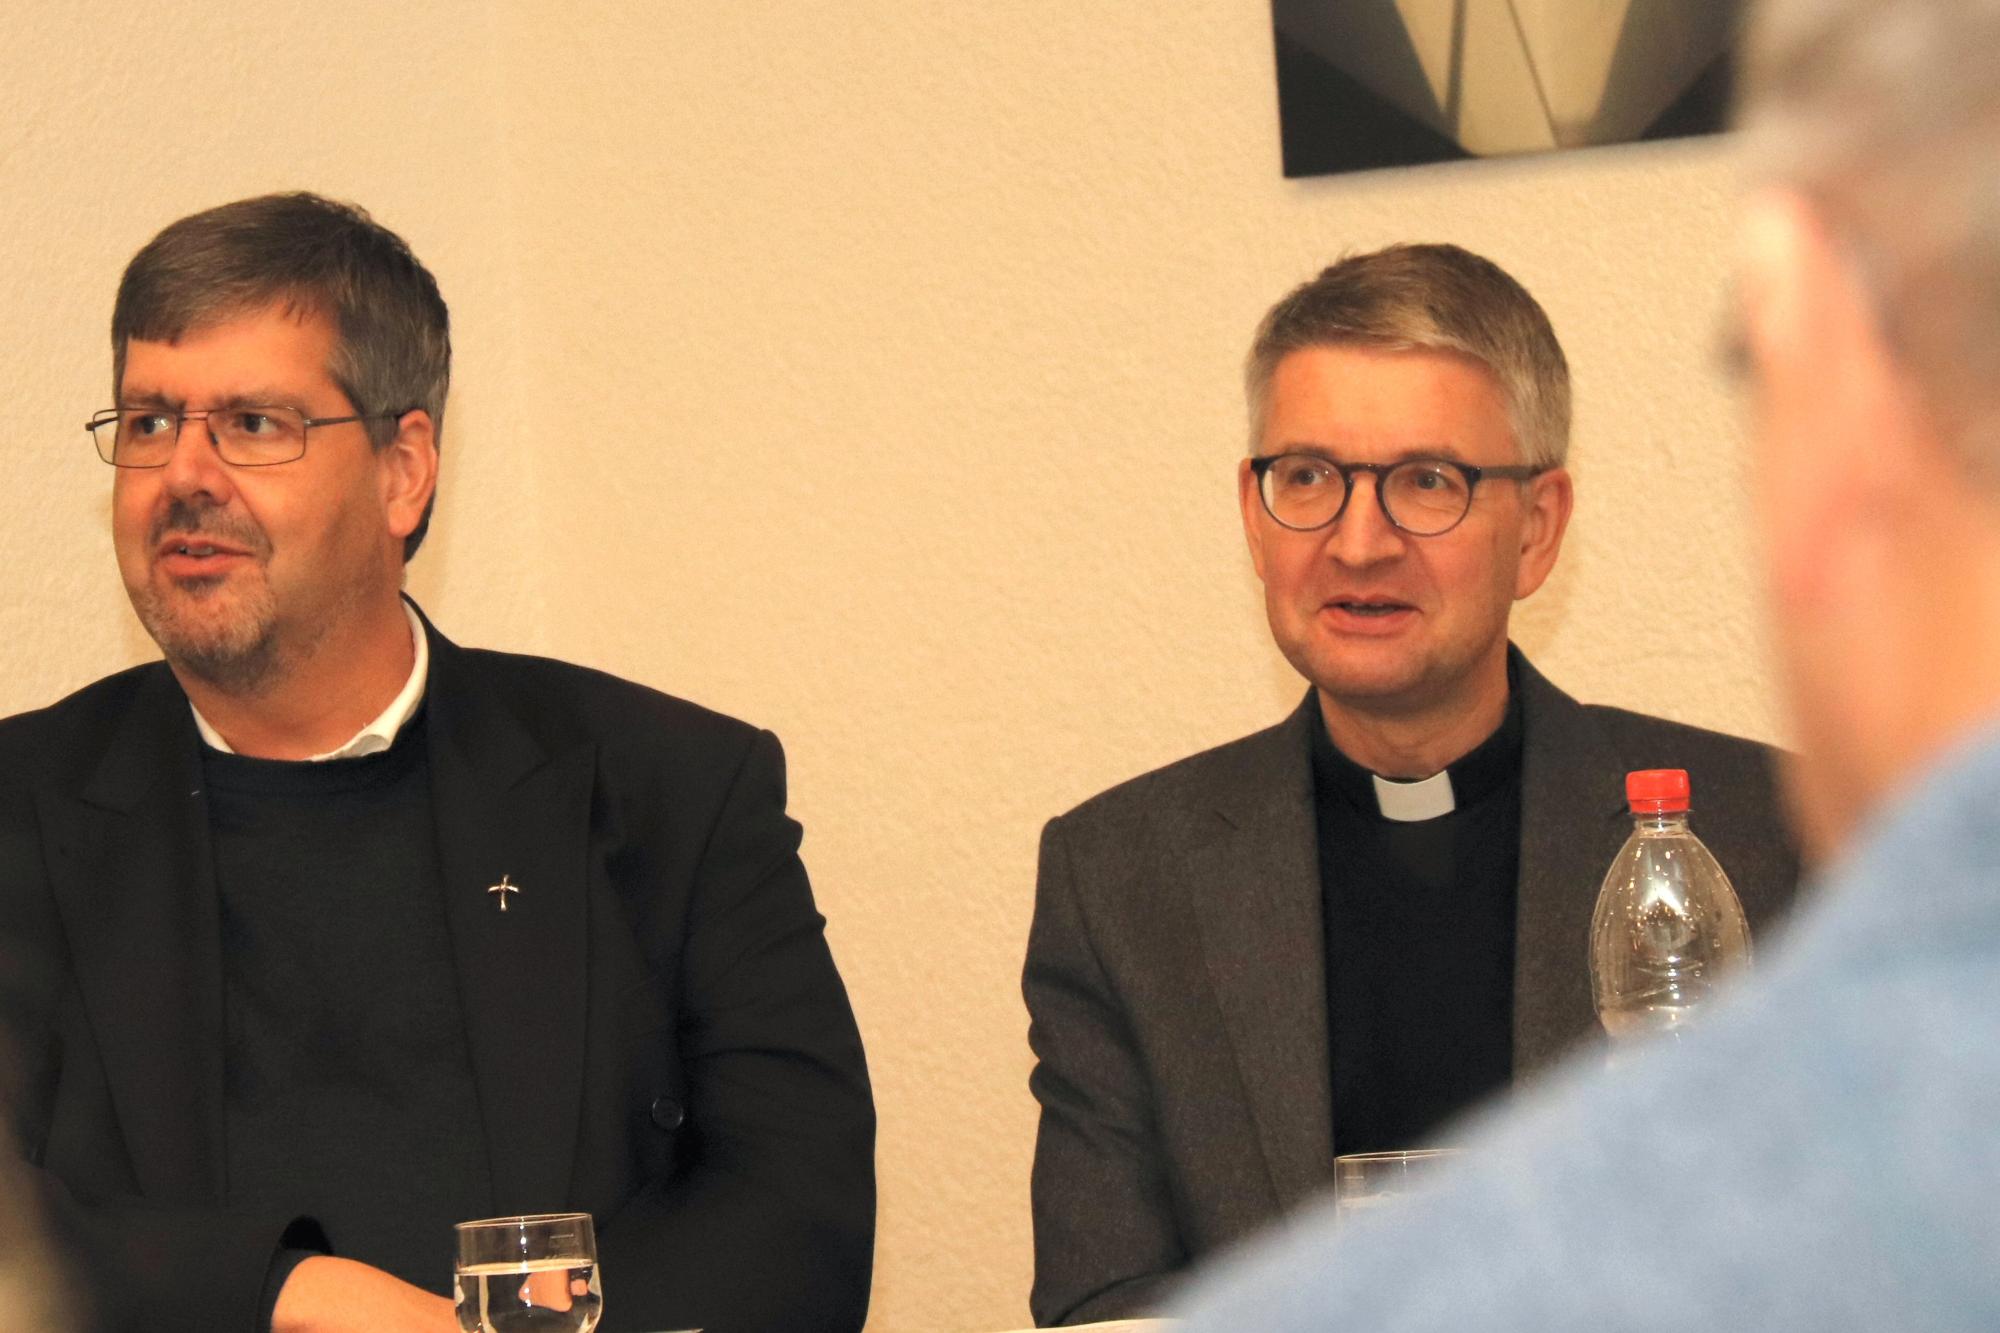 Heppenheim, 28.11.2019: Bischof Peter Kohlgraf (r.) und Dekan Thomas Meurer